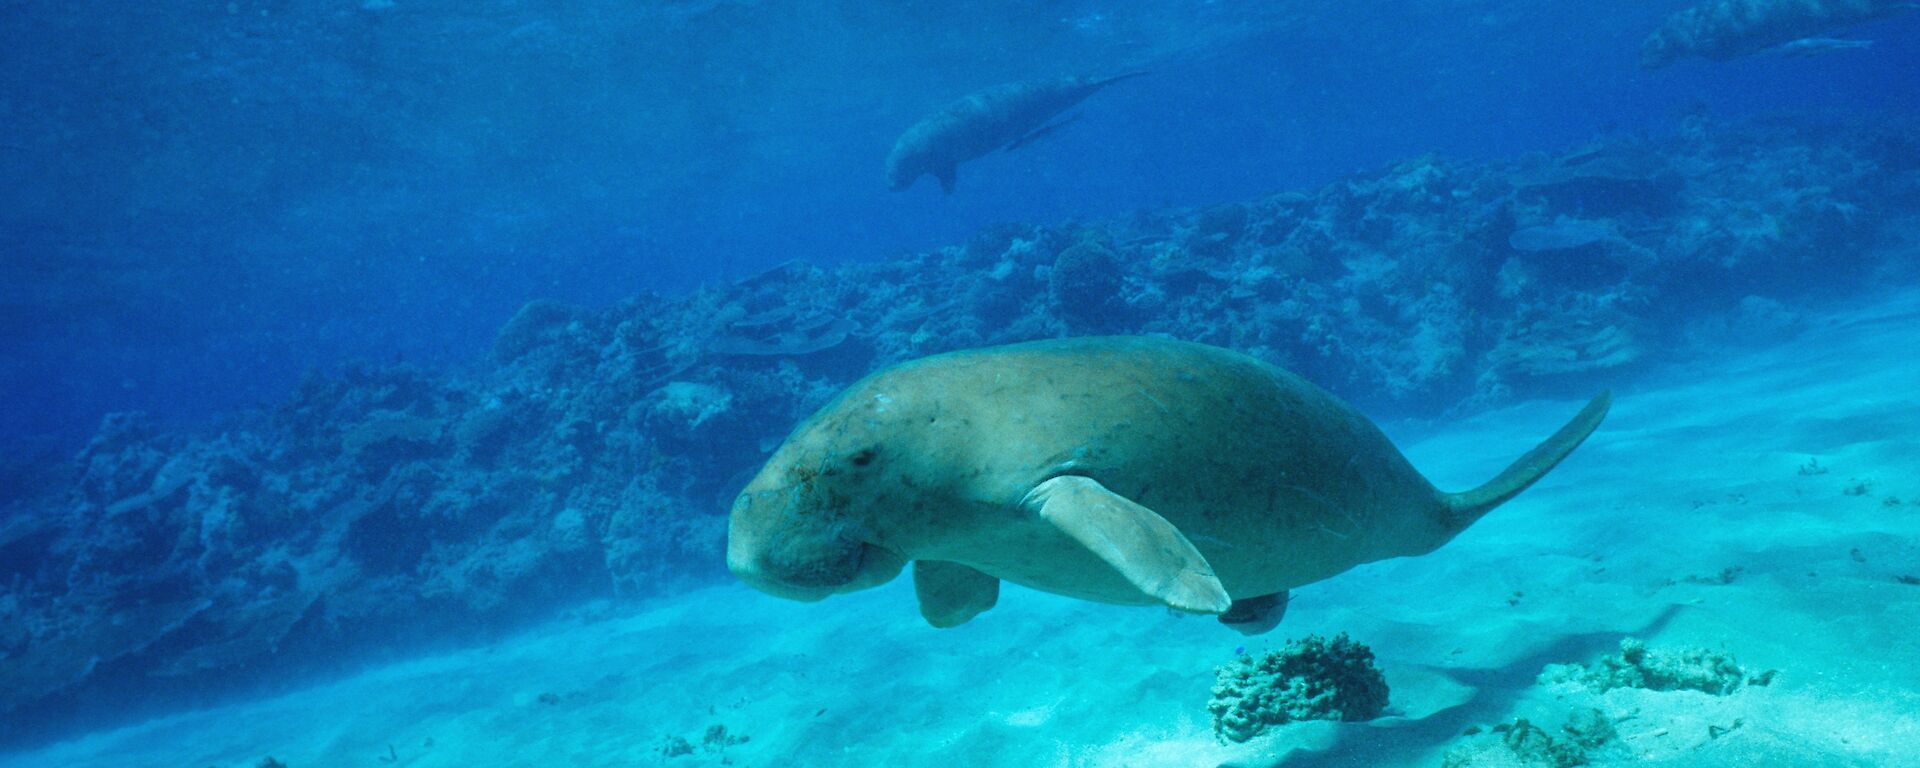 A dugong swims along the sandy sea floor